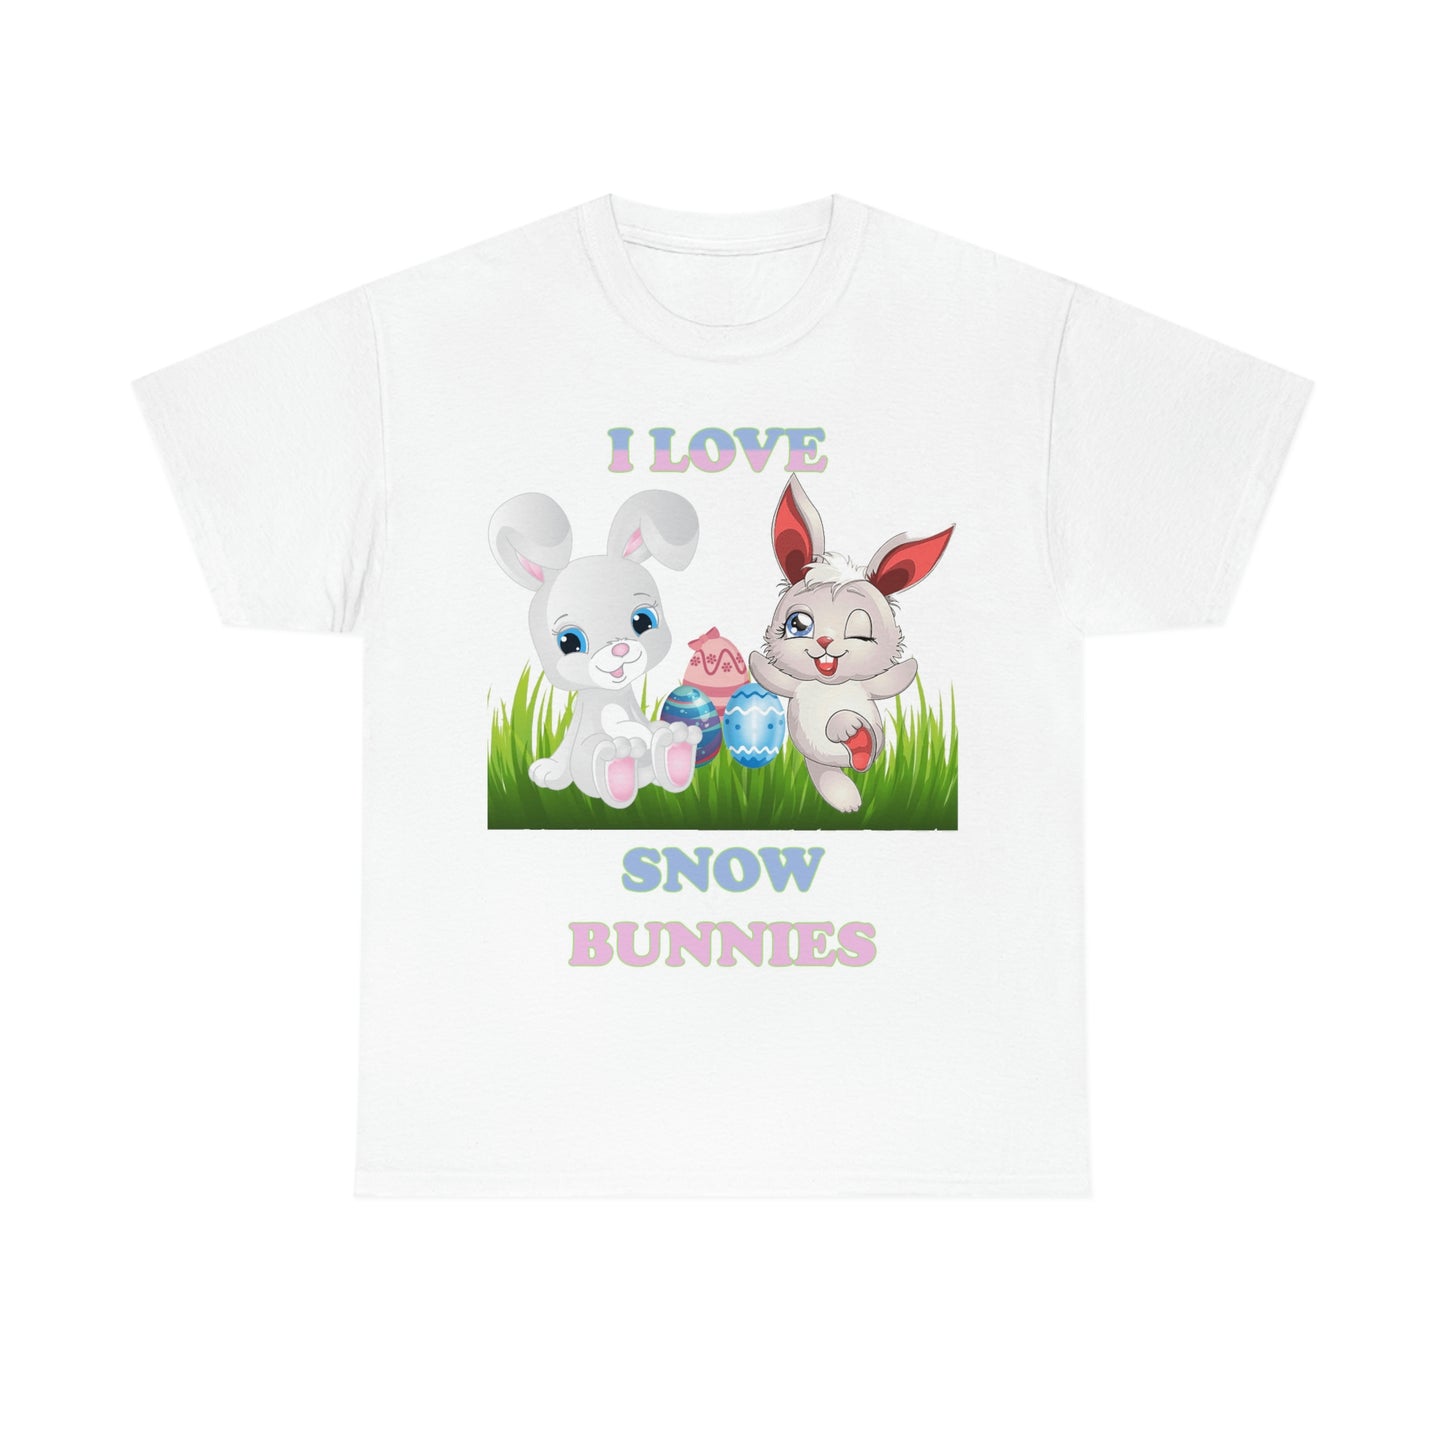 Snow bunnies Tee